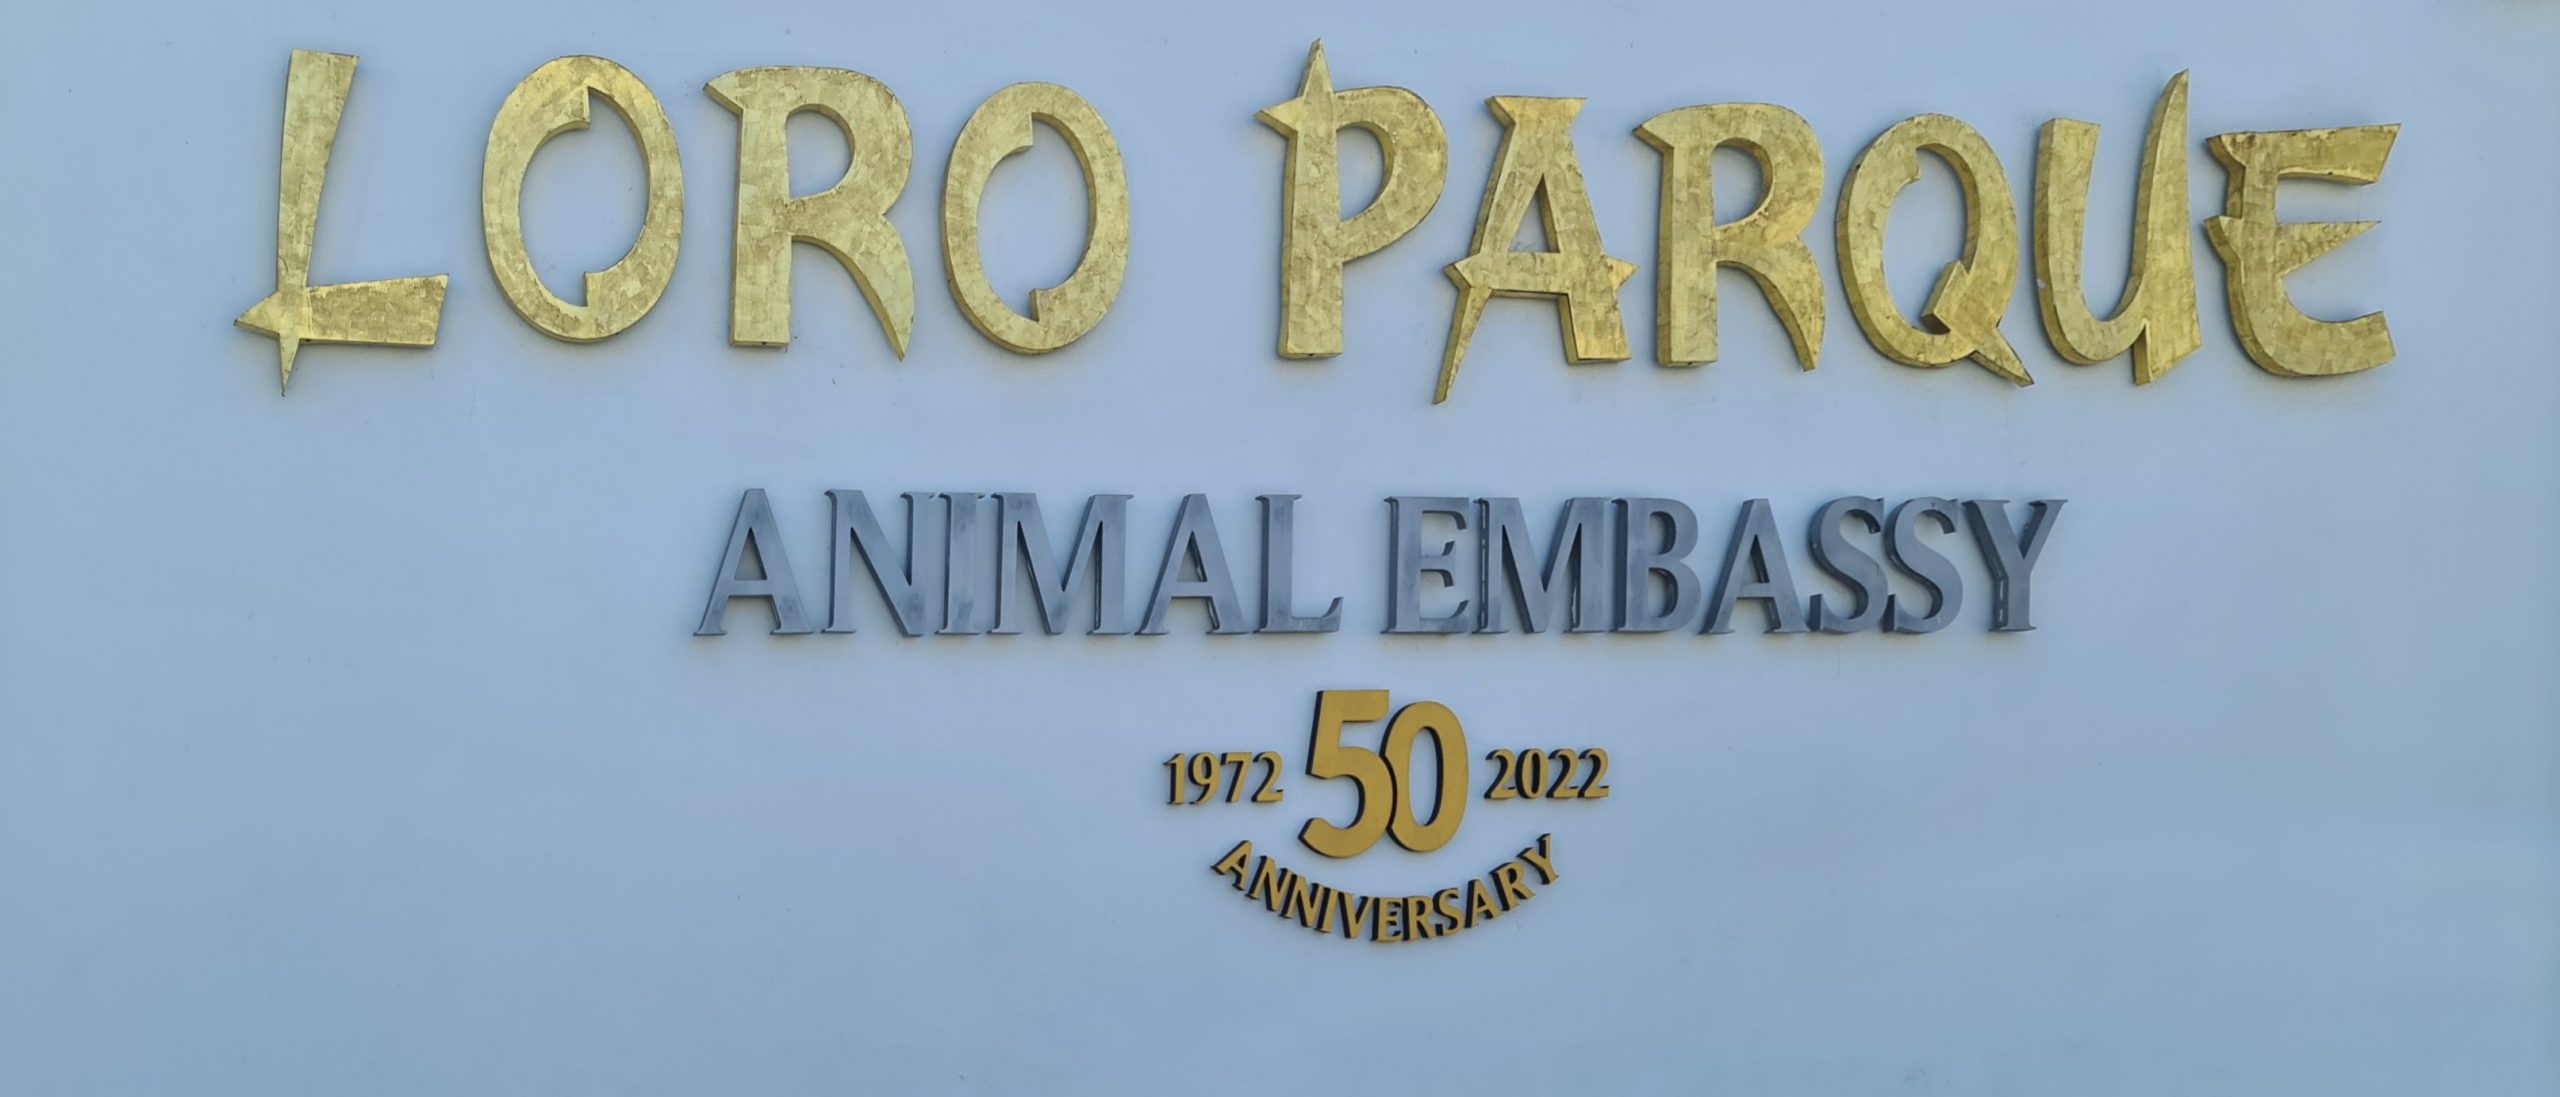 Loro Parque, Animal Embassy, 1972 - 2022, 50 Anniversary